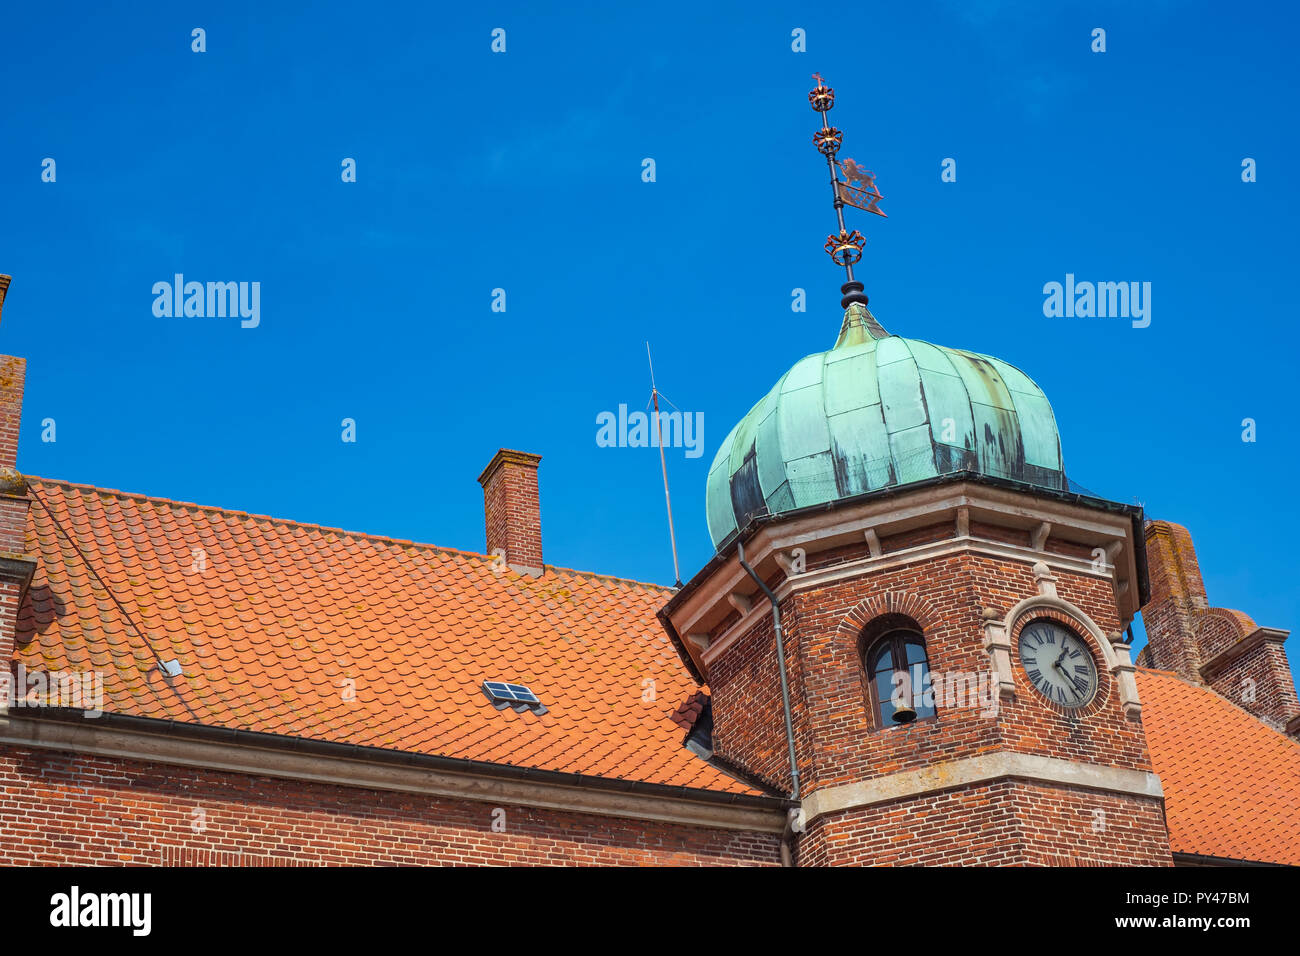 The old historic townhall of Stege, Moen Island, Denmark, Scandinavia, Europe. Stock Photo